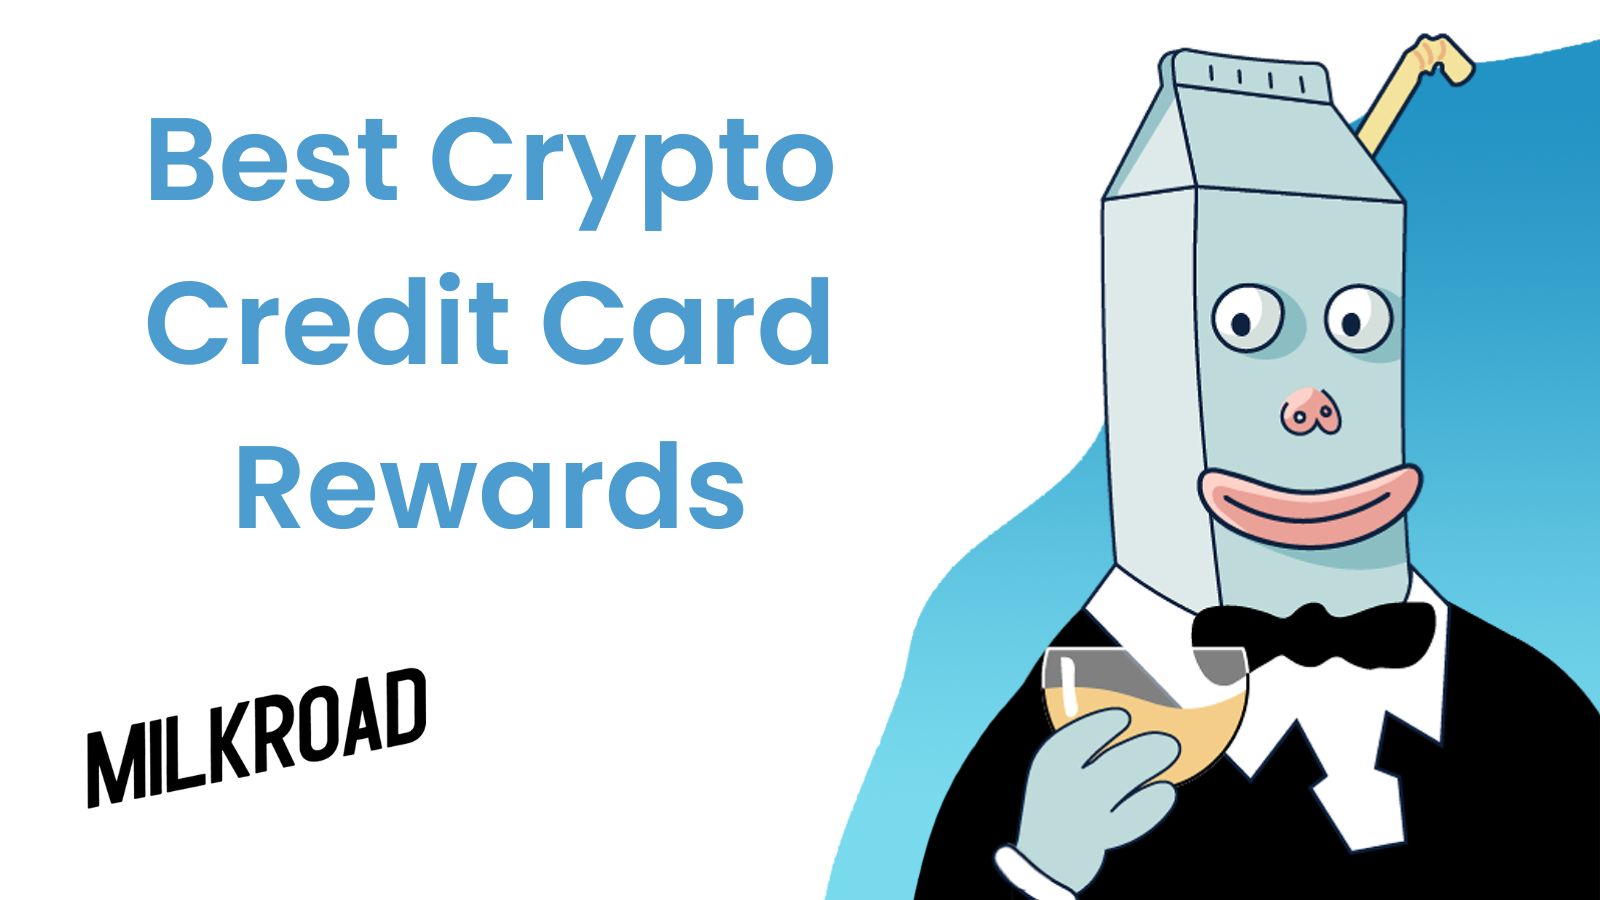 Best Crypto Credit Card Rewards